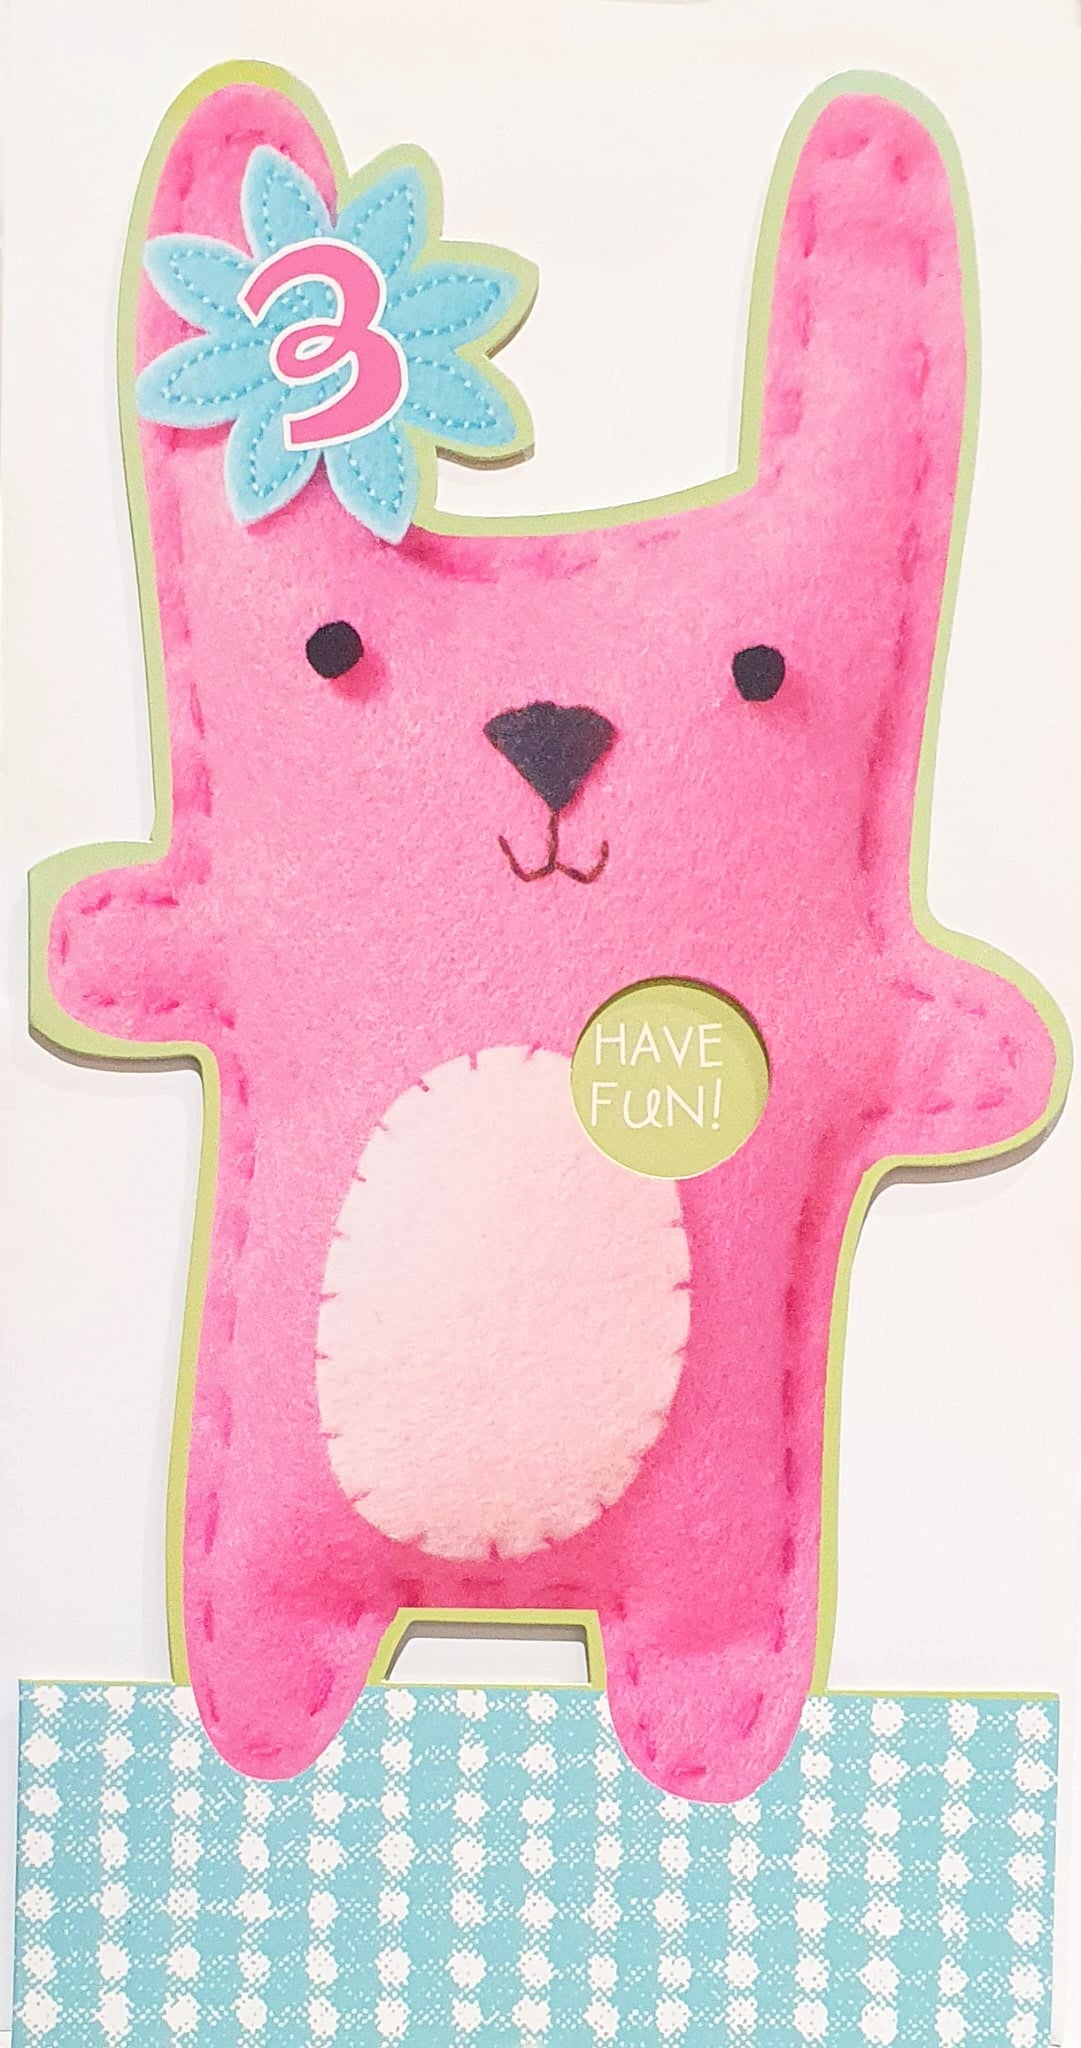 3rd Birthday Card - Pink Teddy Says Have Fun